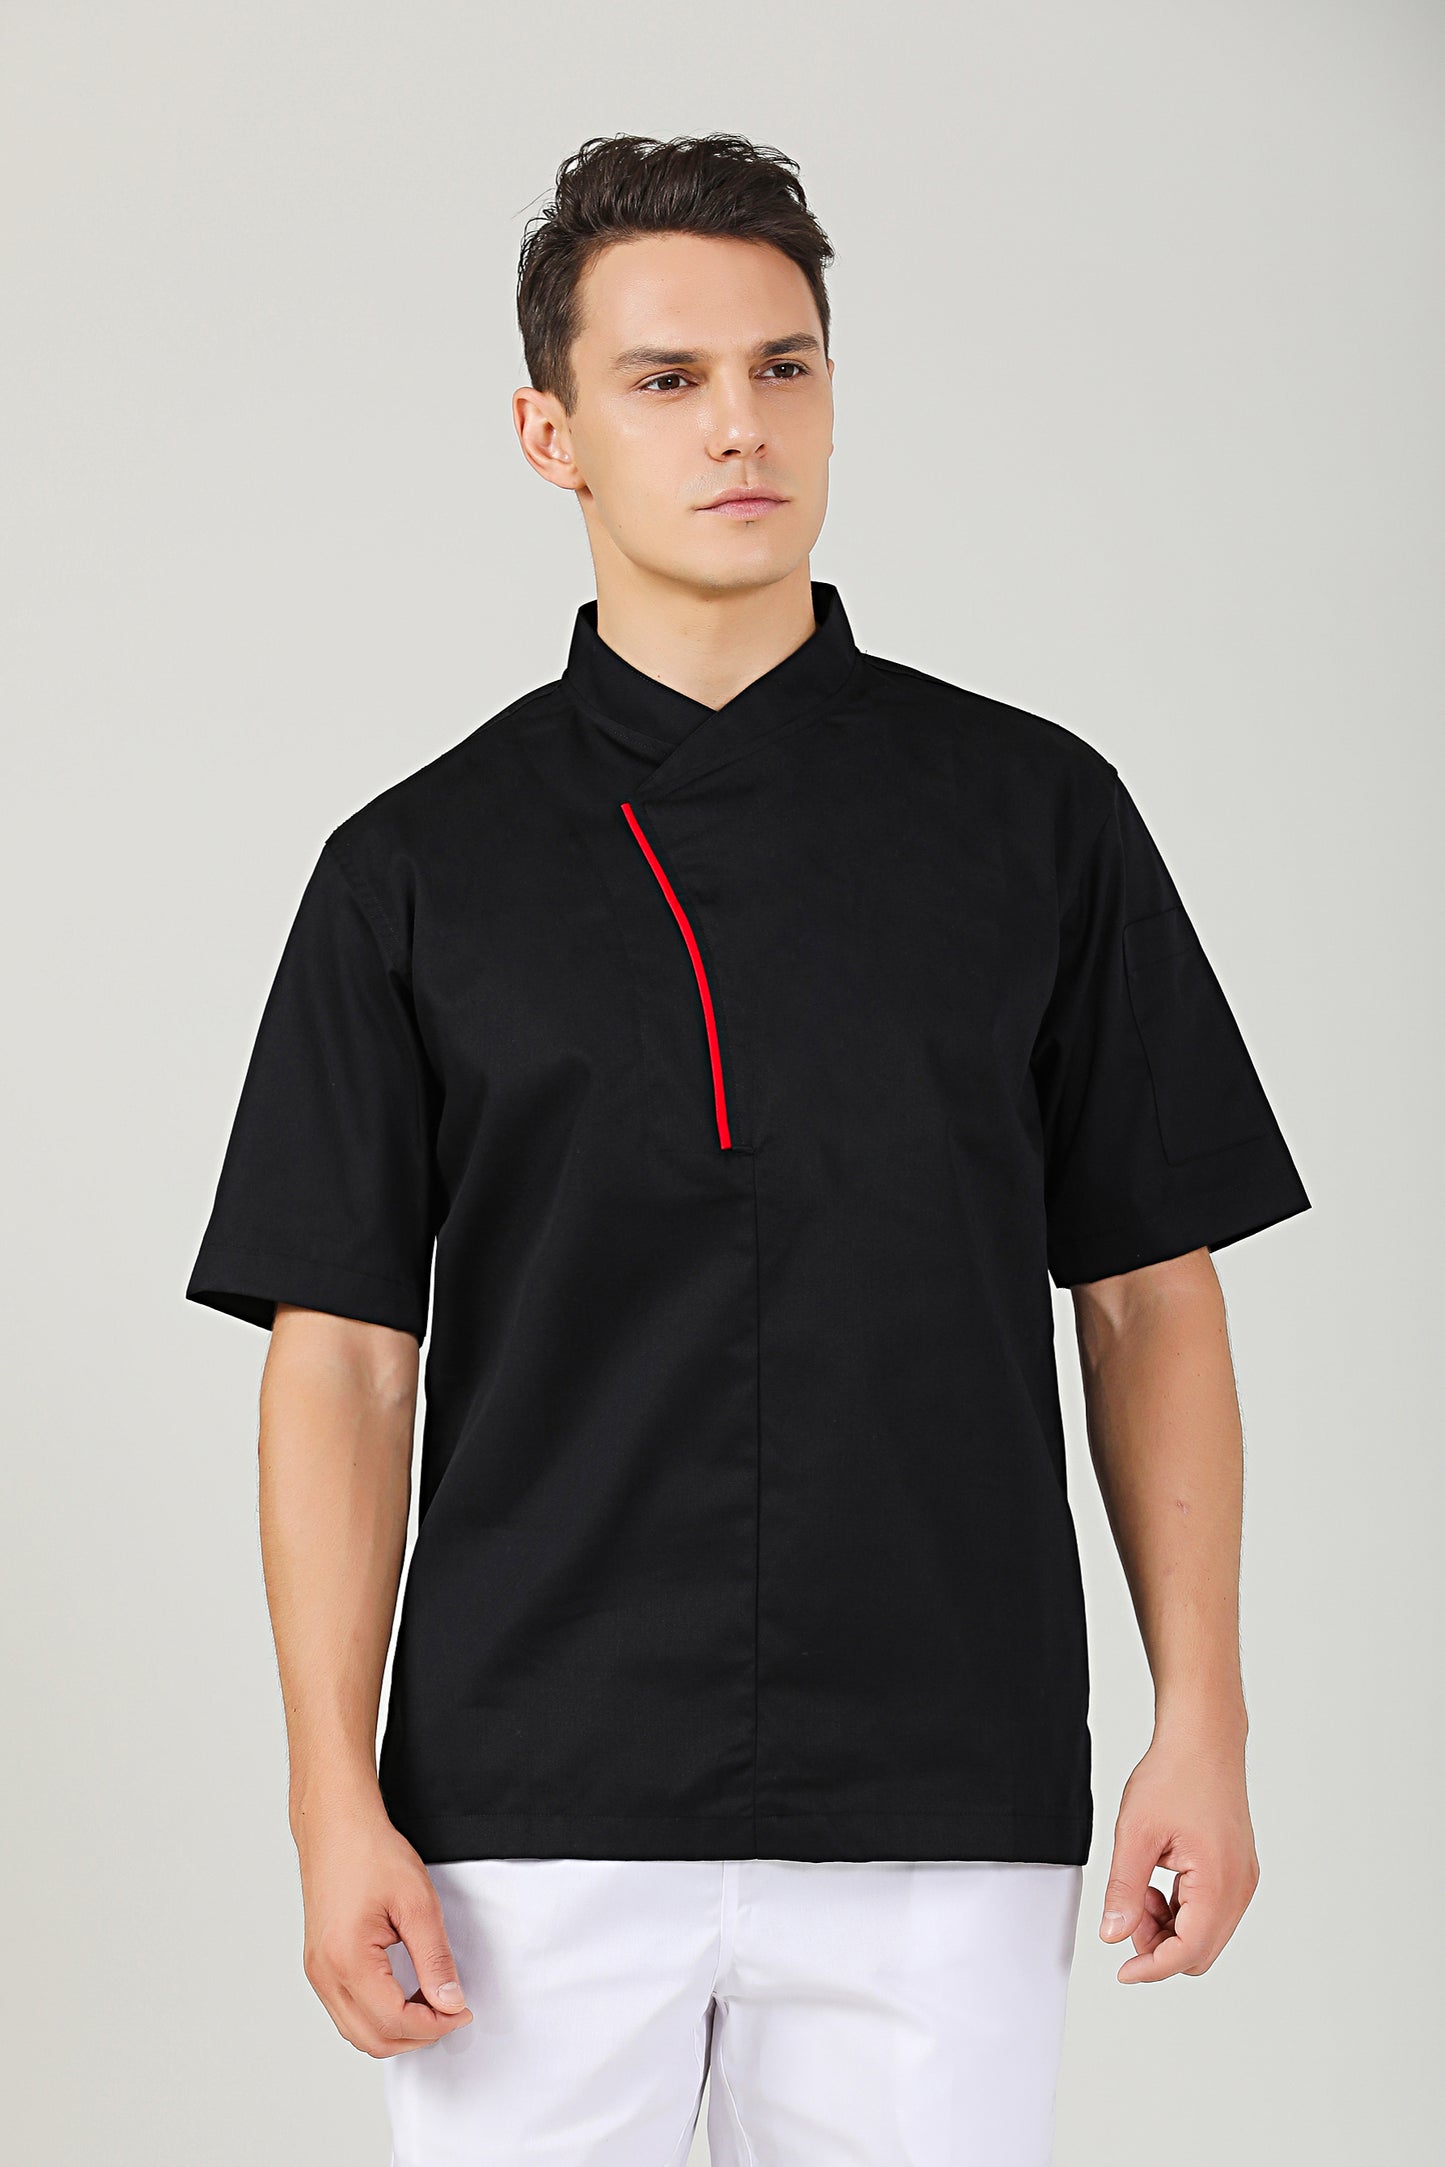 Parsley Black Chef Jacket, Short Sleeve